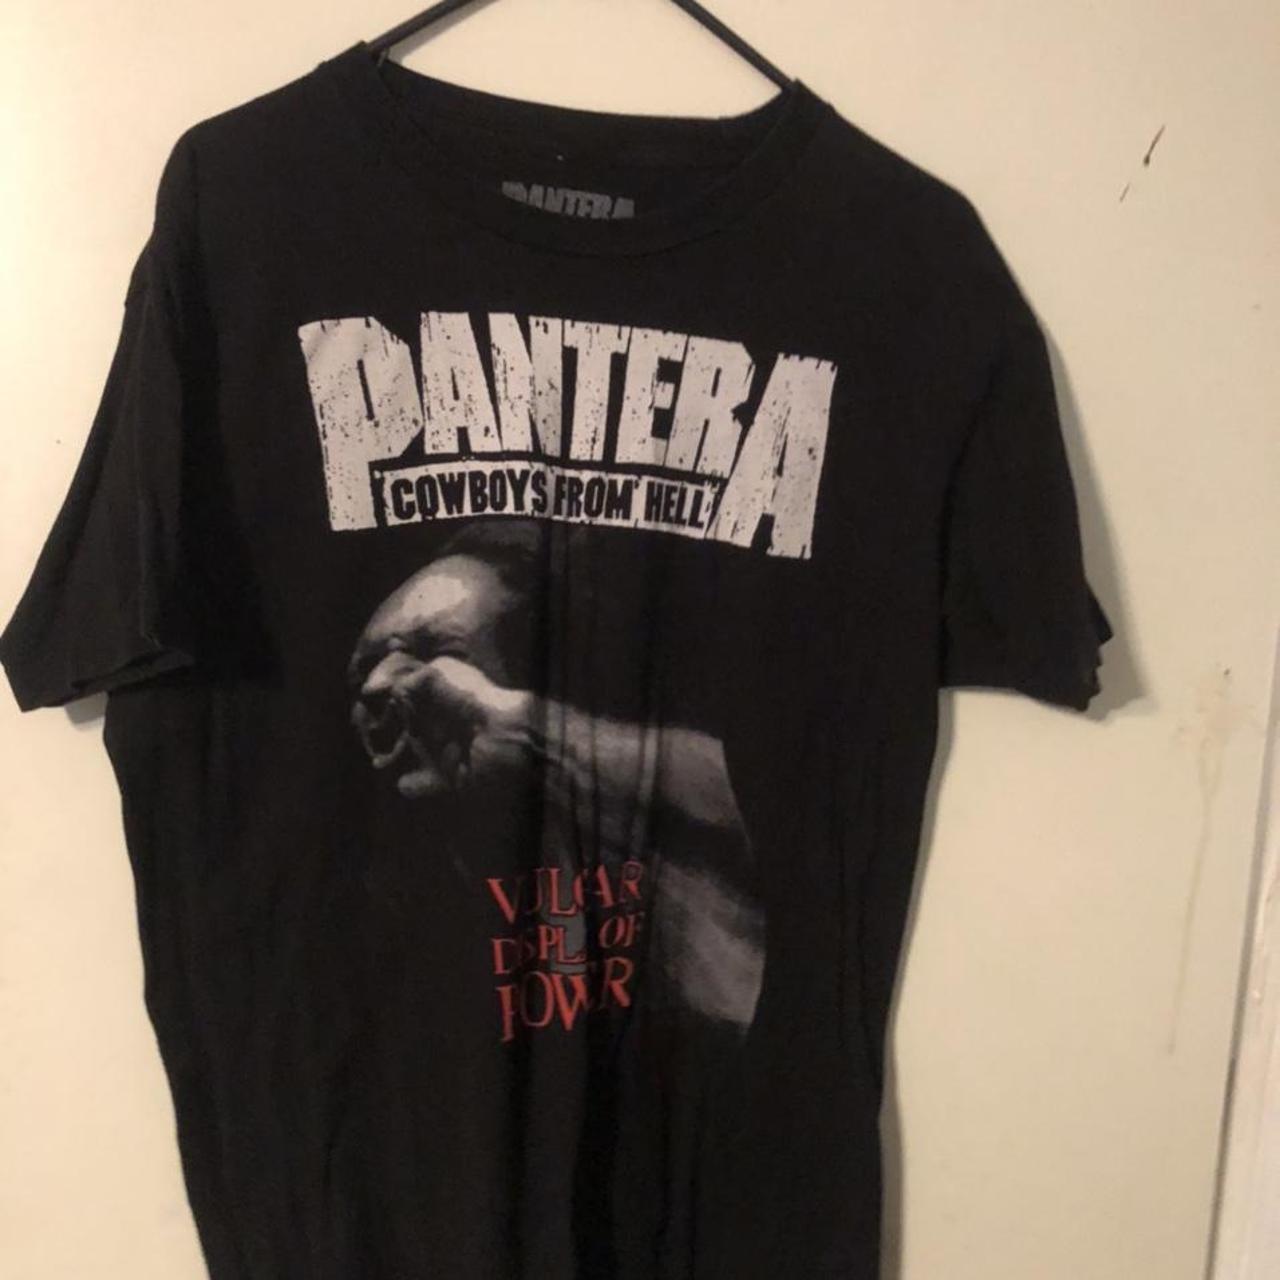 Pantera vulgar display of power tee Shirt is a... - Depop